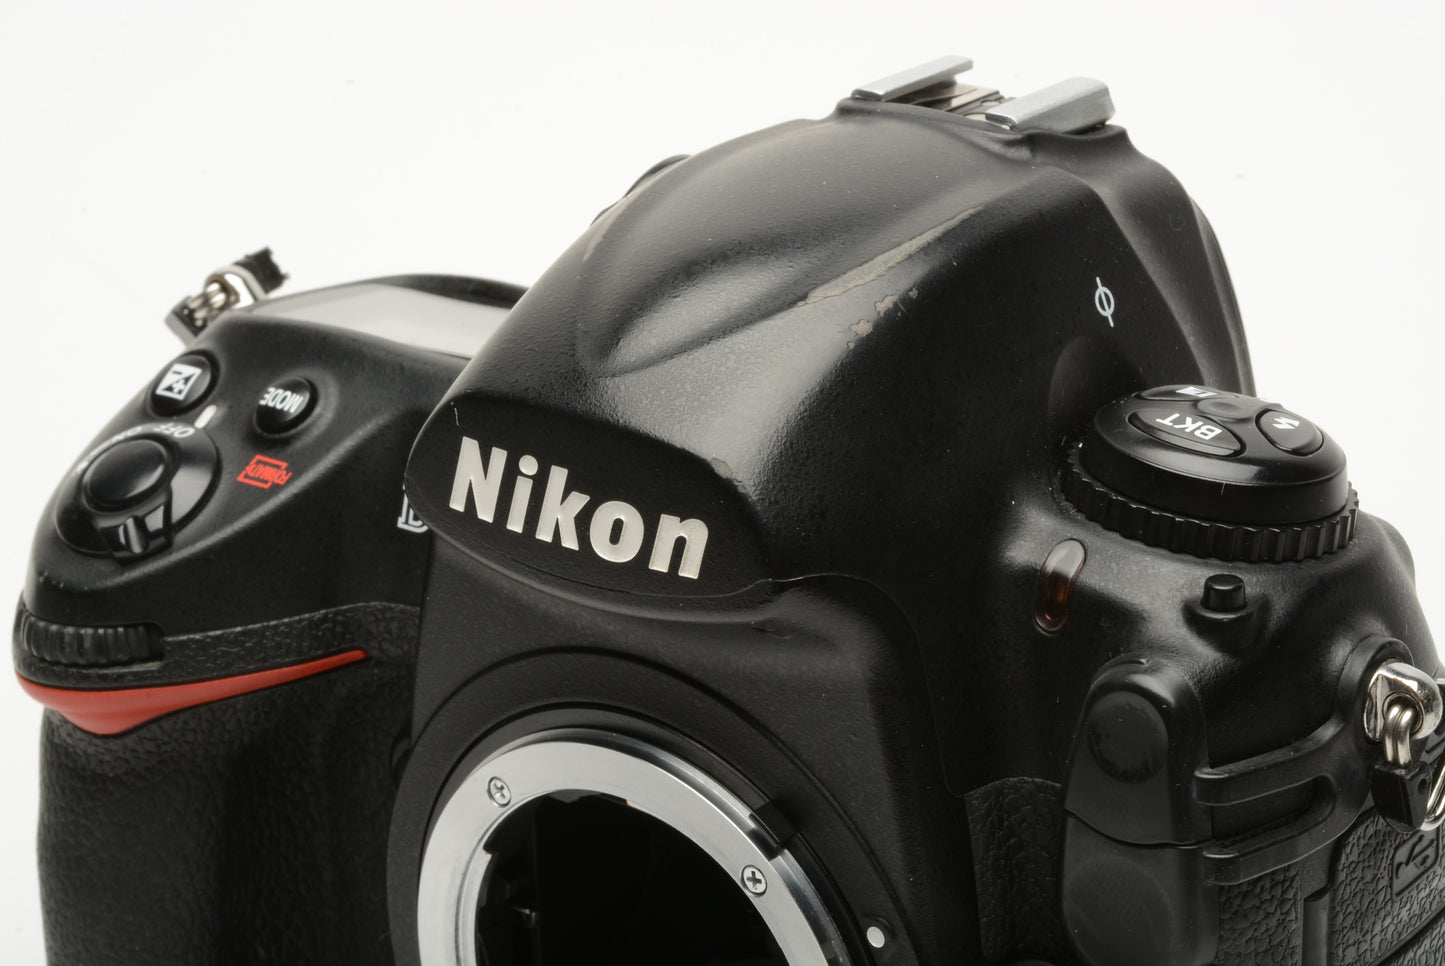 Nikon D3 12.1MP DSLR body, 2batts, charger, strap, manuals 73K Acts!  Great camera!